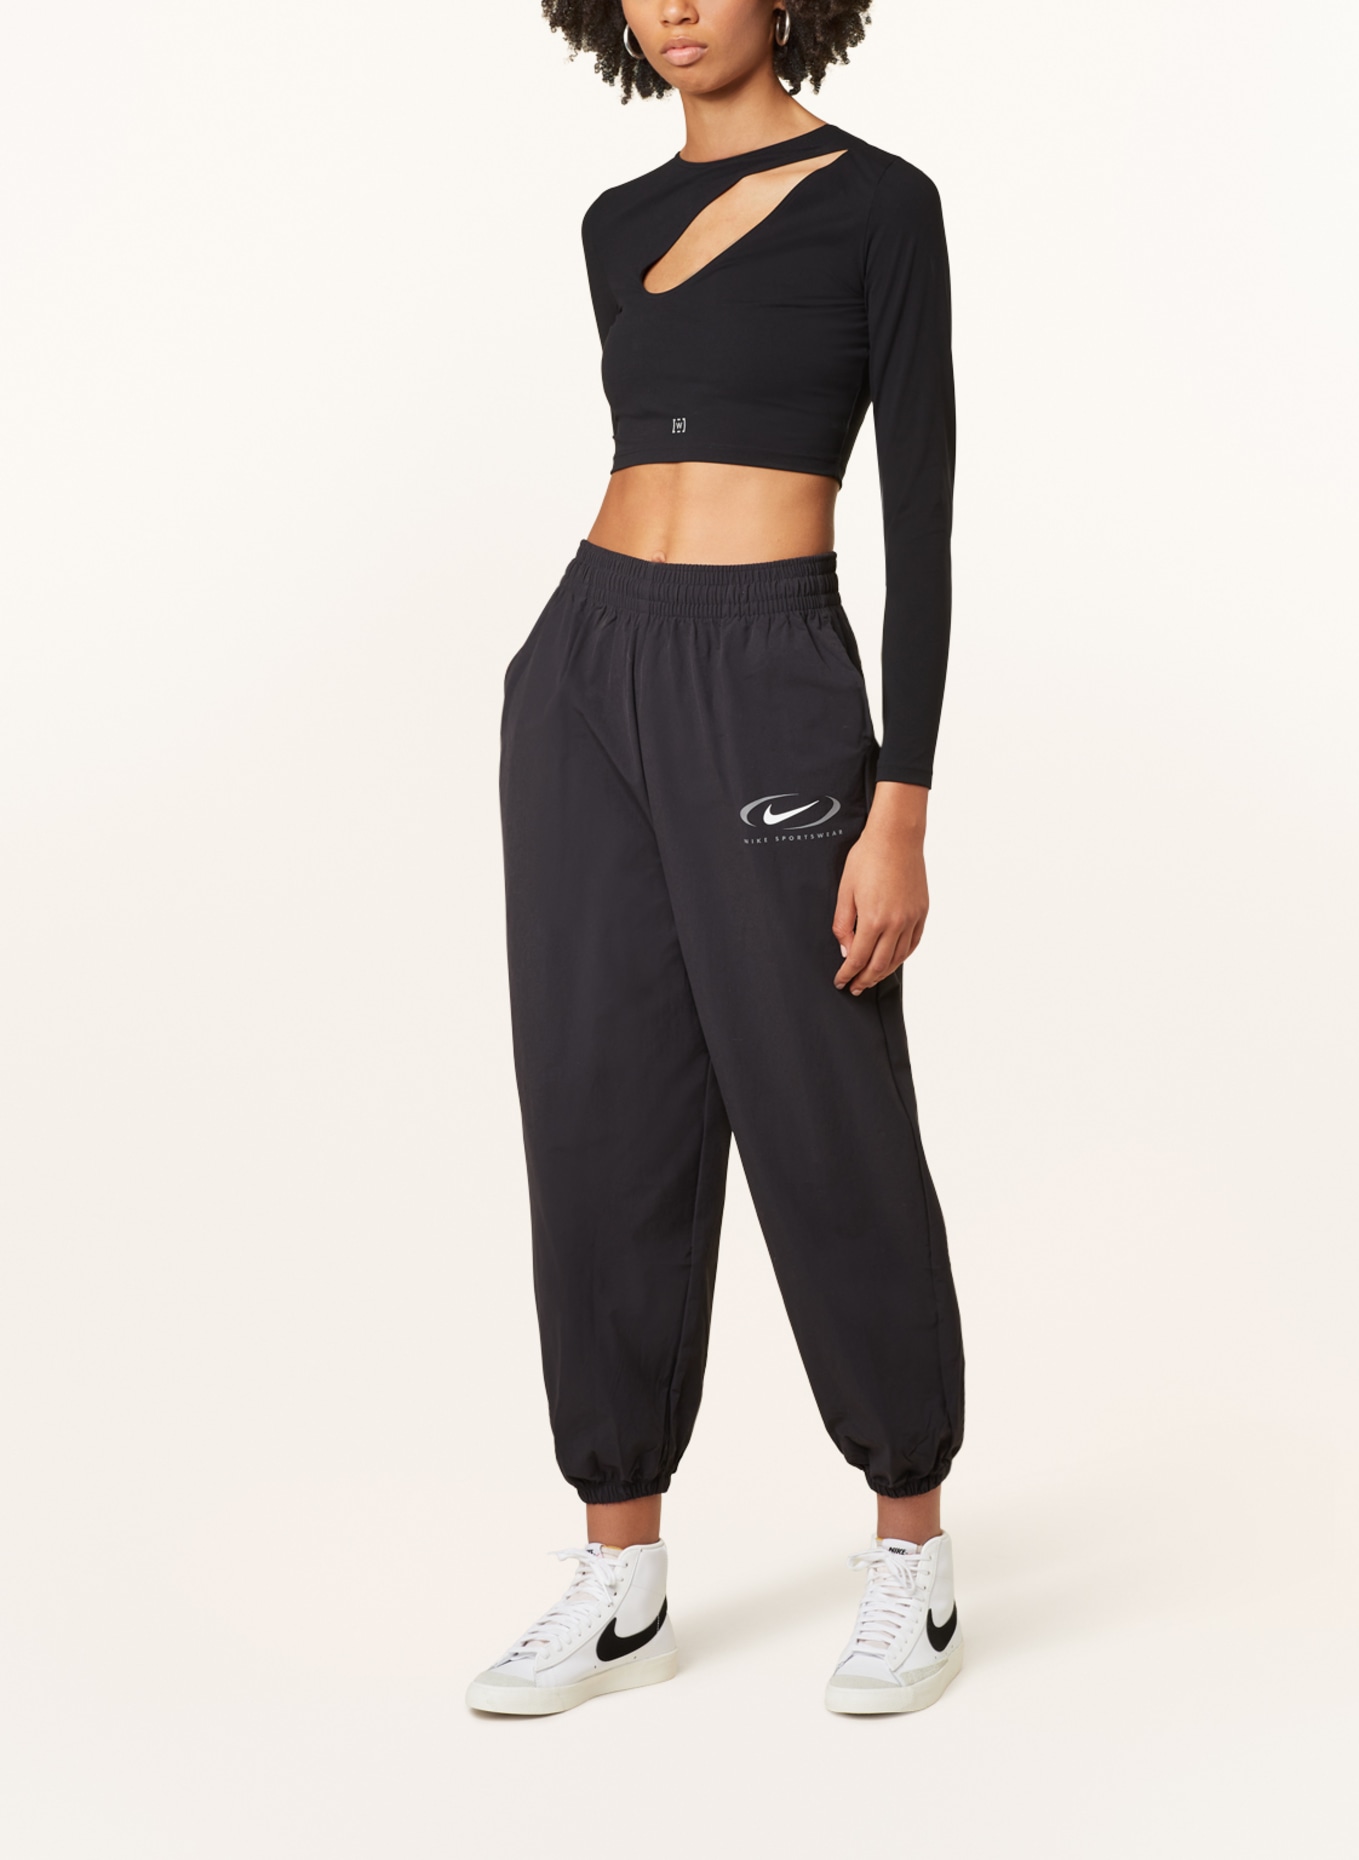 Nike Pants in jogger style in black/ white/ light gray